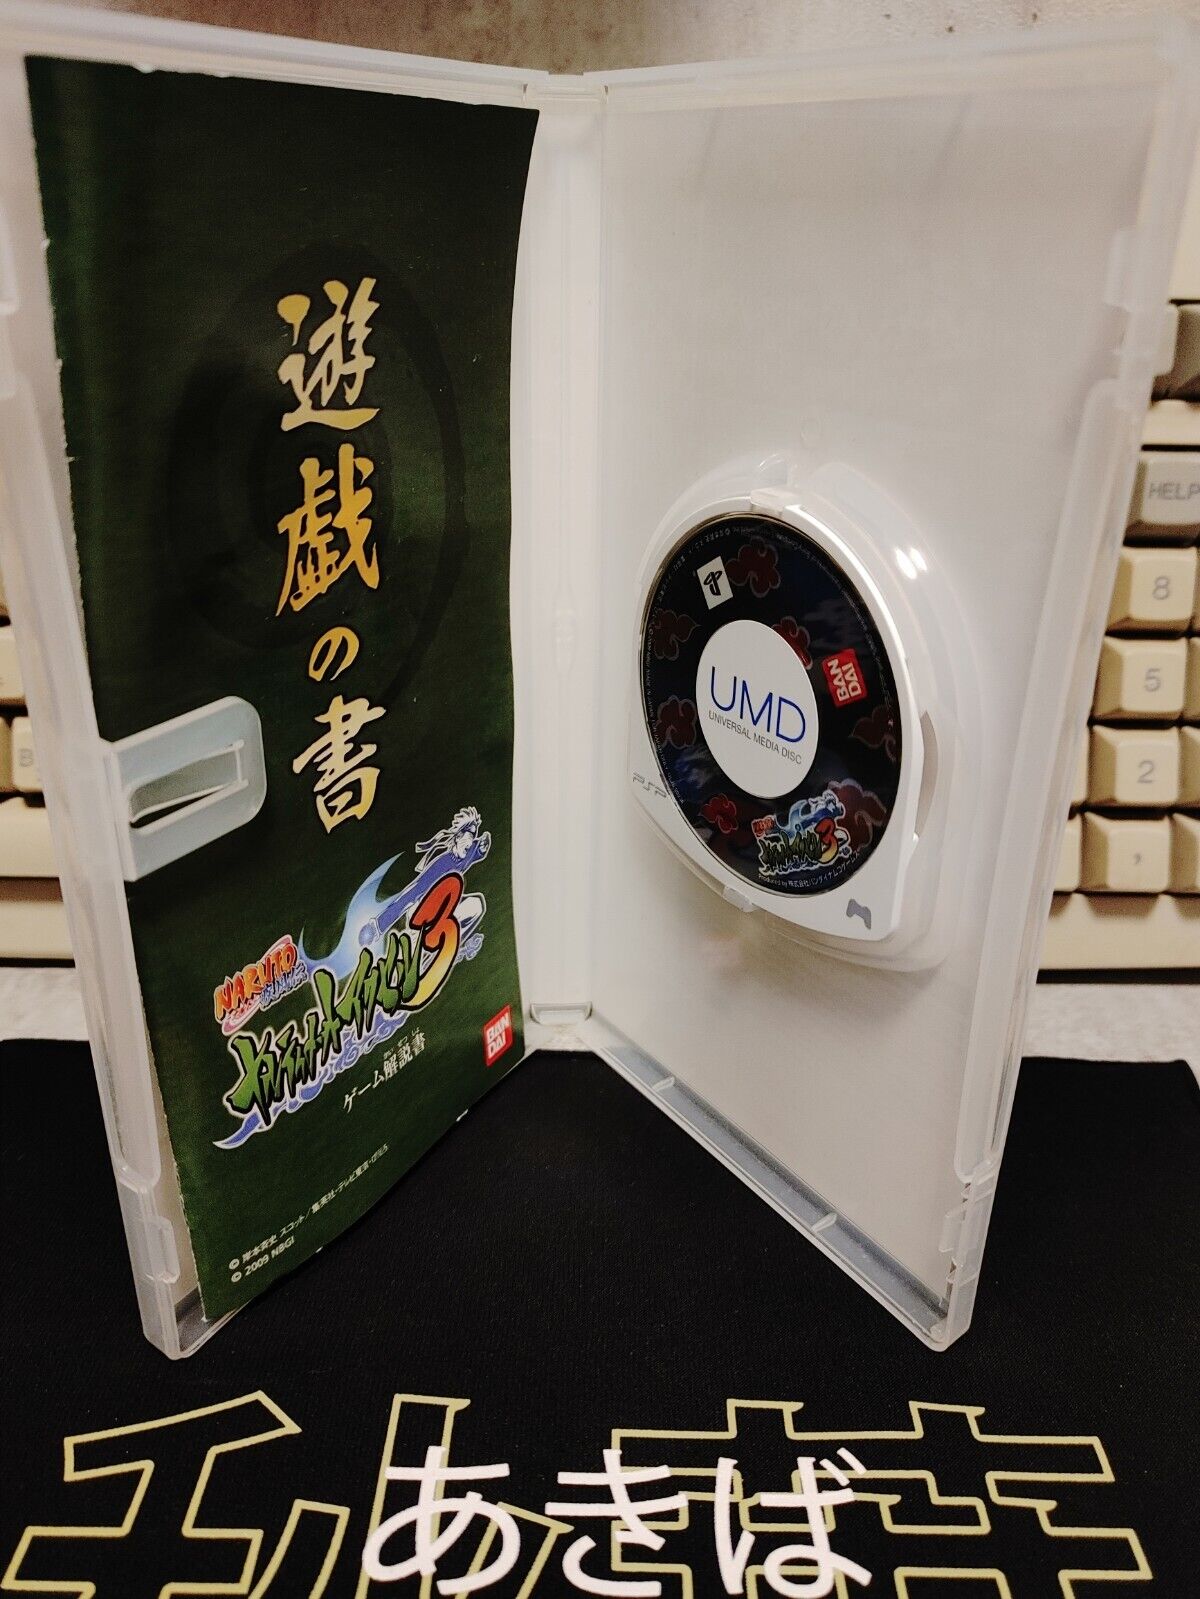 Naruto Shippuden Ultimate Ninja Heroes 3 PSP Playstation Portable Japan Import